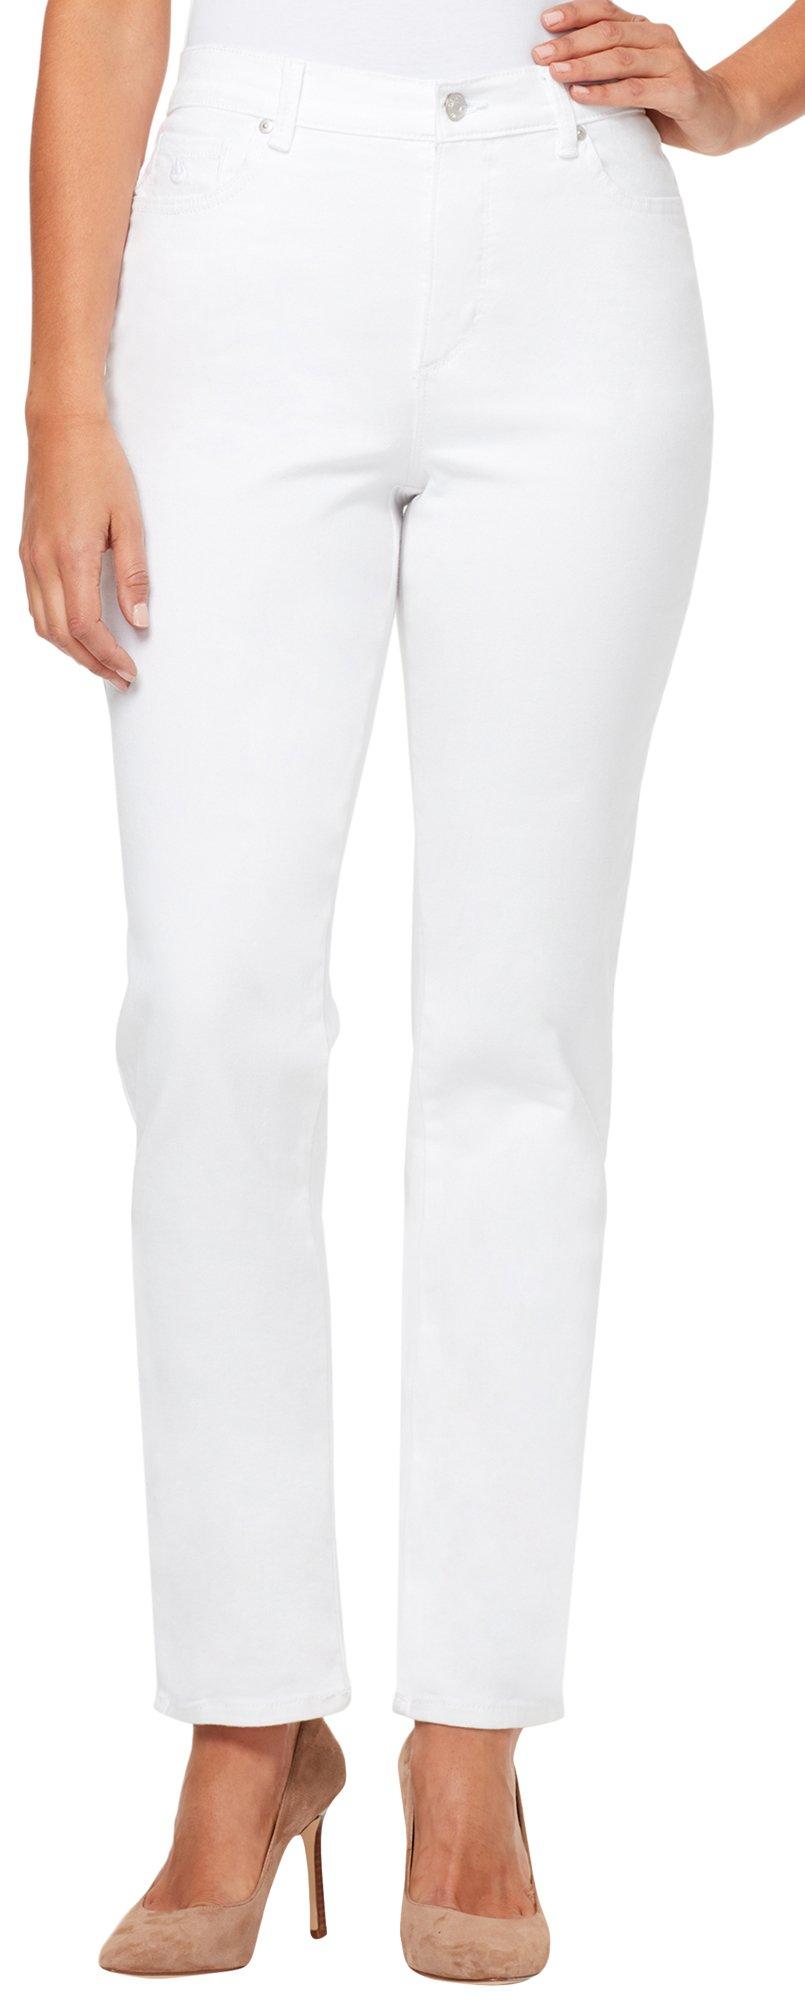 Petite Short  Amanda Original White Jeans